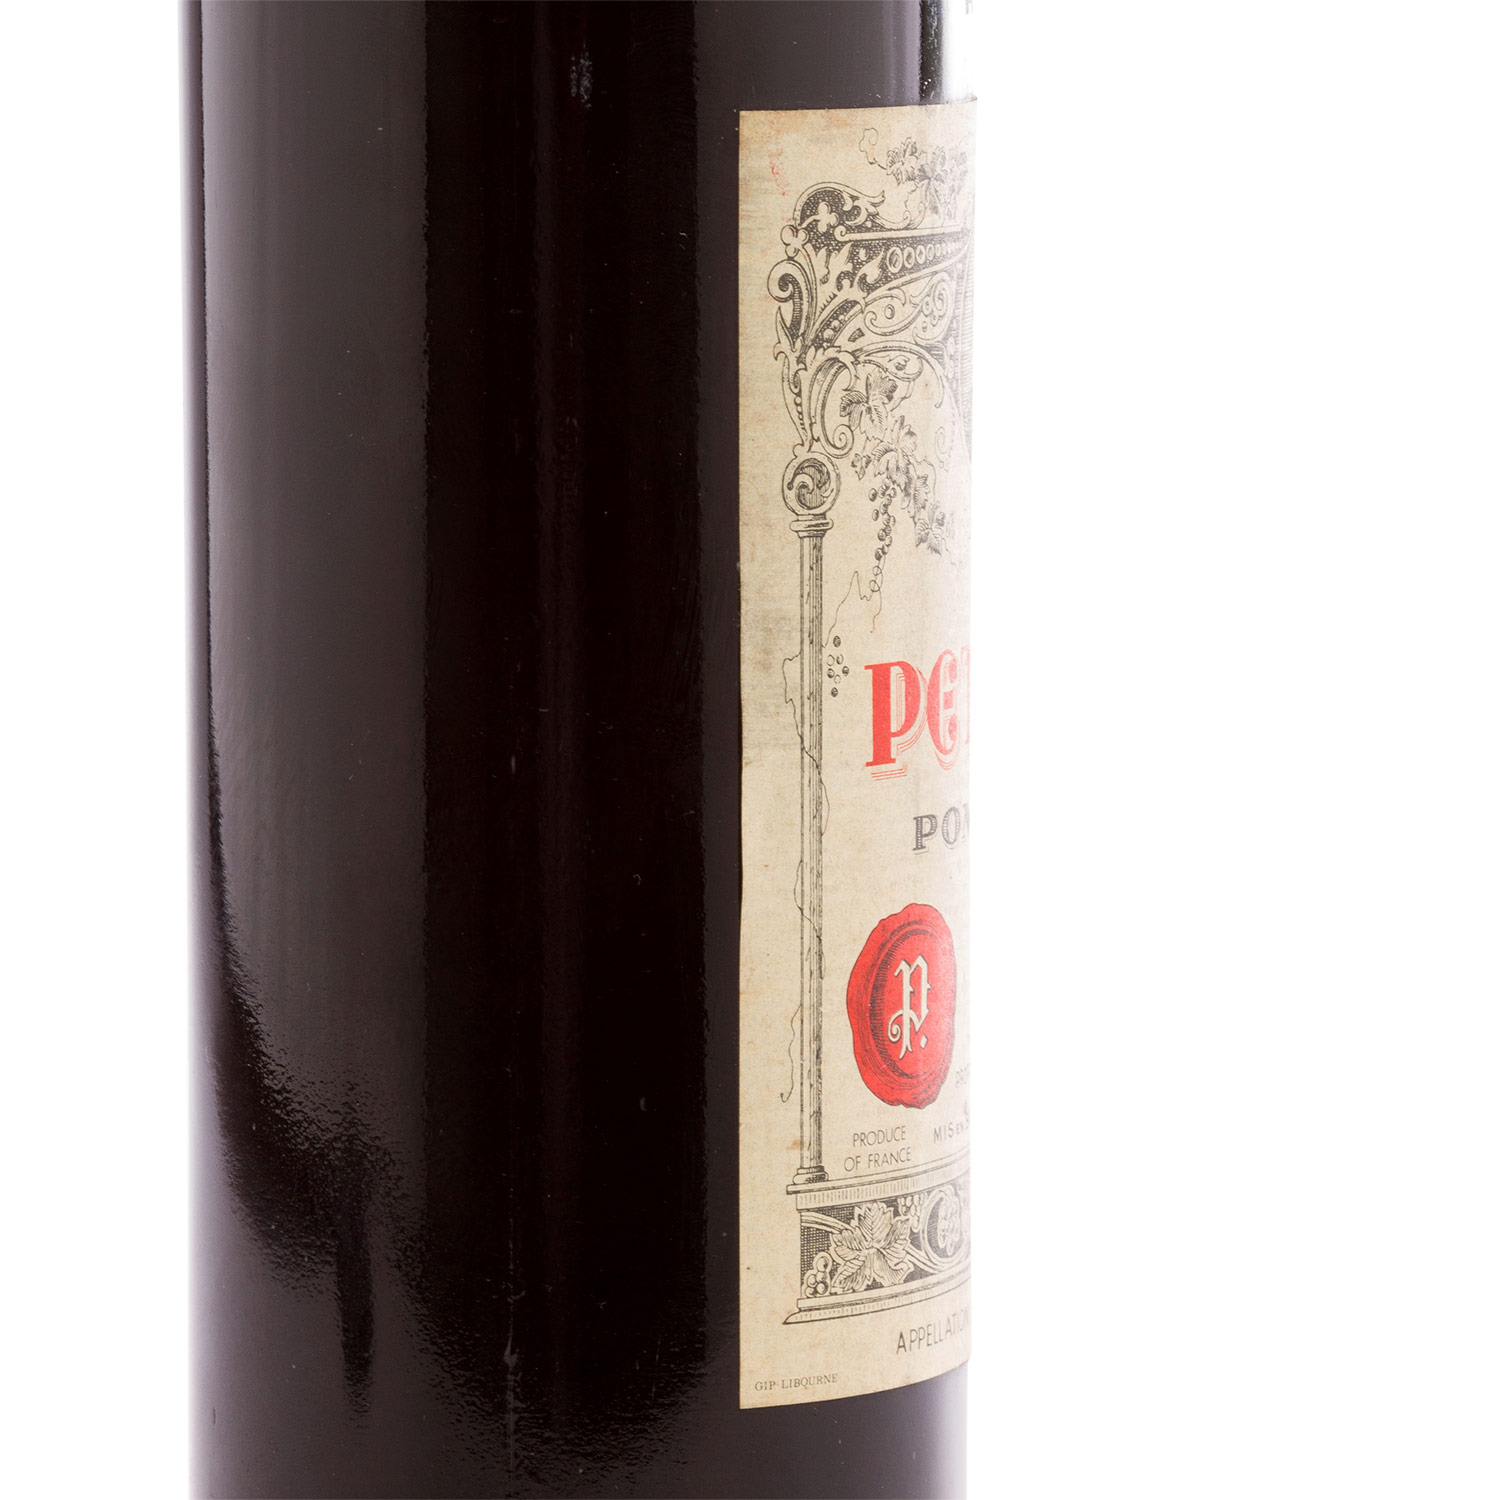 PETRUS, Pomerol, 1975Bordeaux, Frankreich, Rebsorte: Merlot, 13-15% Vol., 730 ml, Füllstand in der - Image 5 of 10